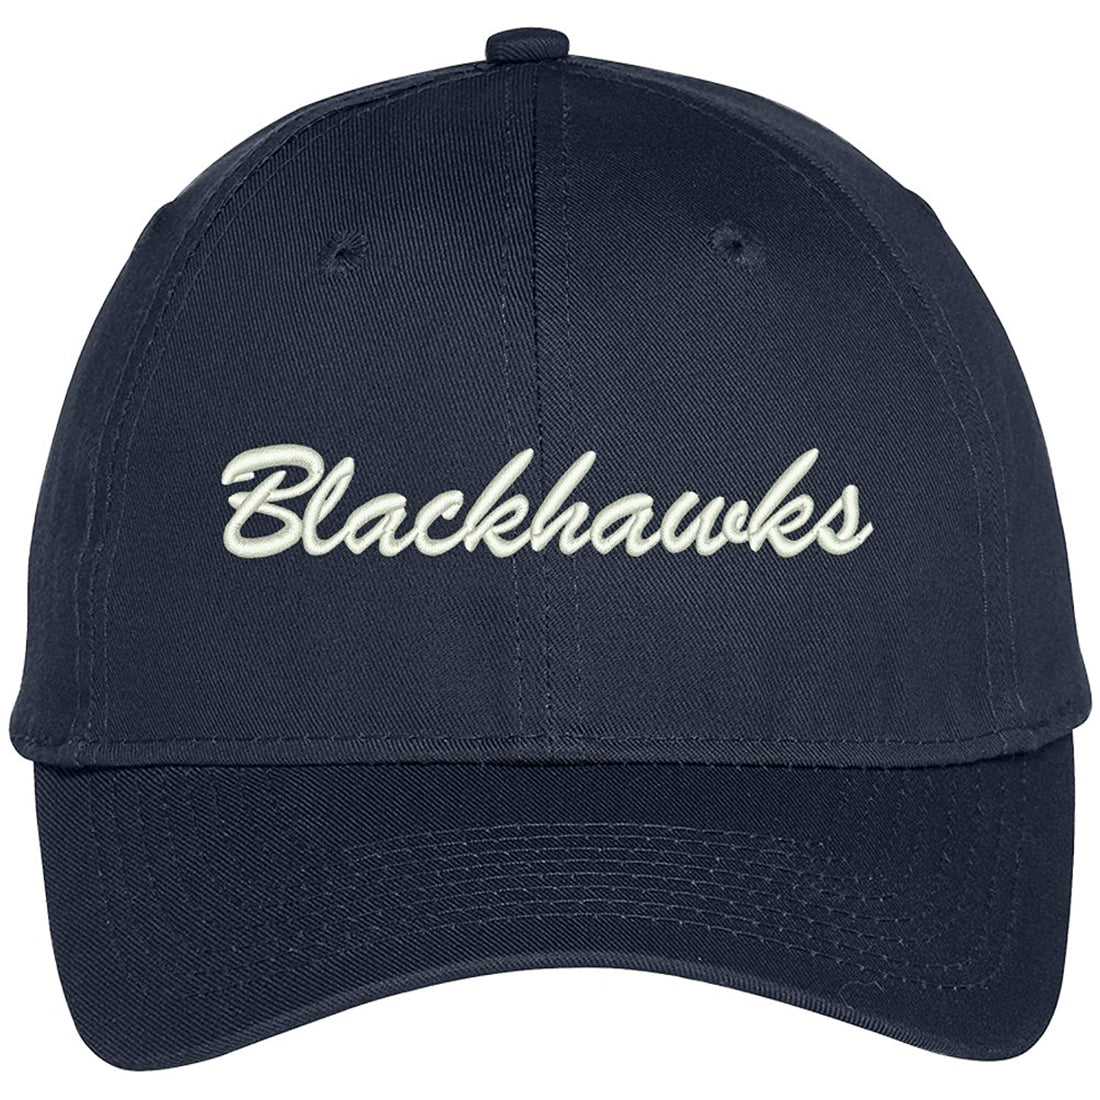 Trendy Apparel Shop Blackhawks Embroidered Precurved Adjustable Cap